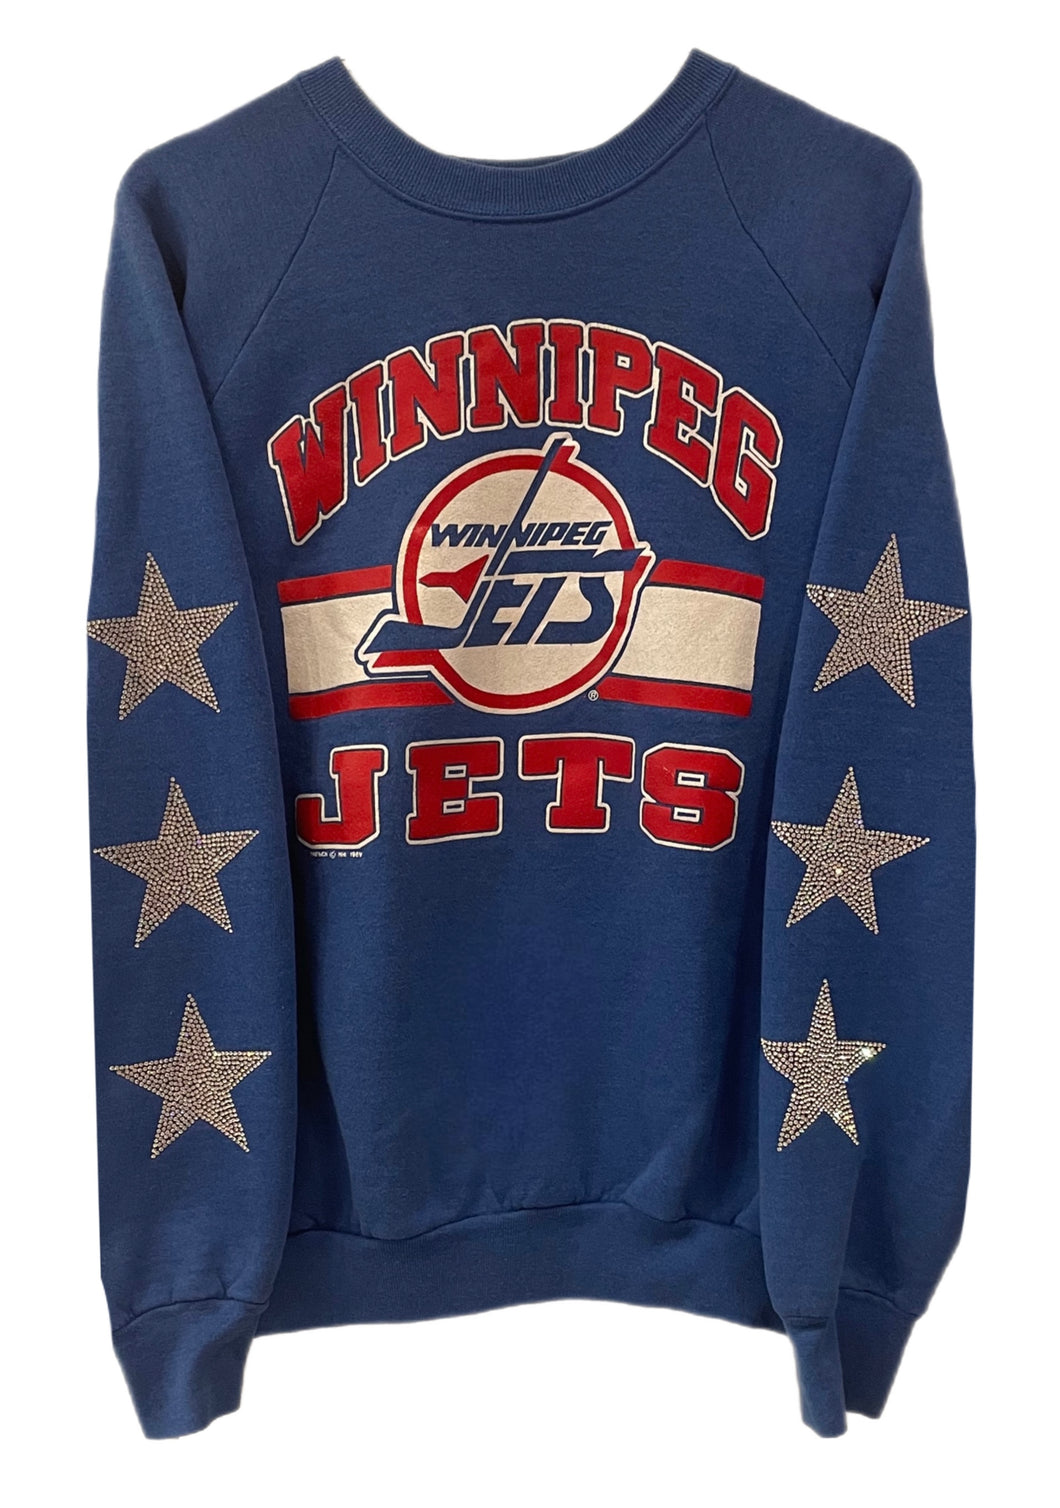 Winnipeg Jets, NHL One of a KIND Vintage “Rare Find” Sweatshirt with Three Crystal Star Design - Size: Medium